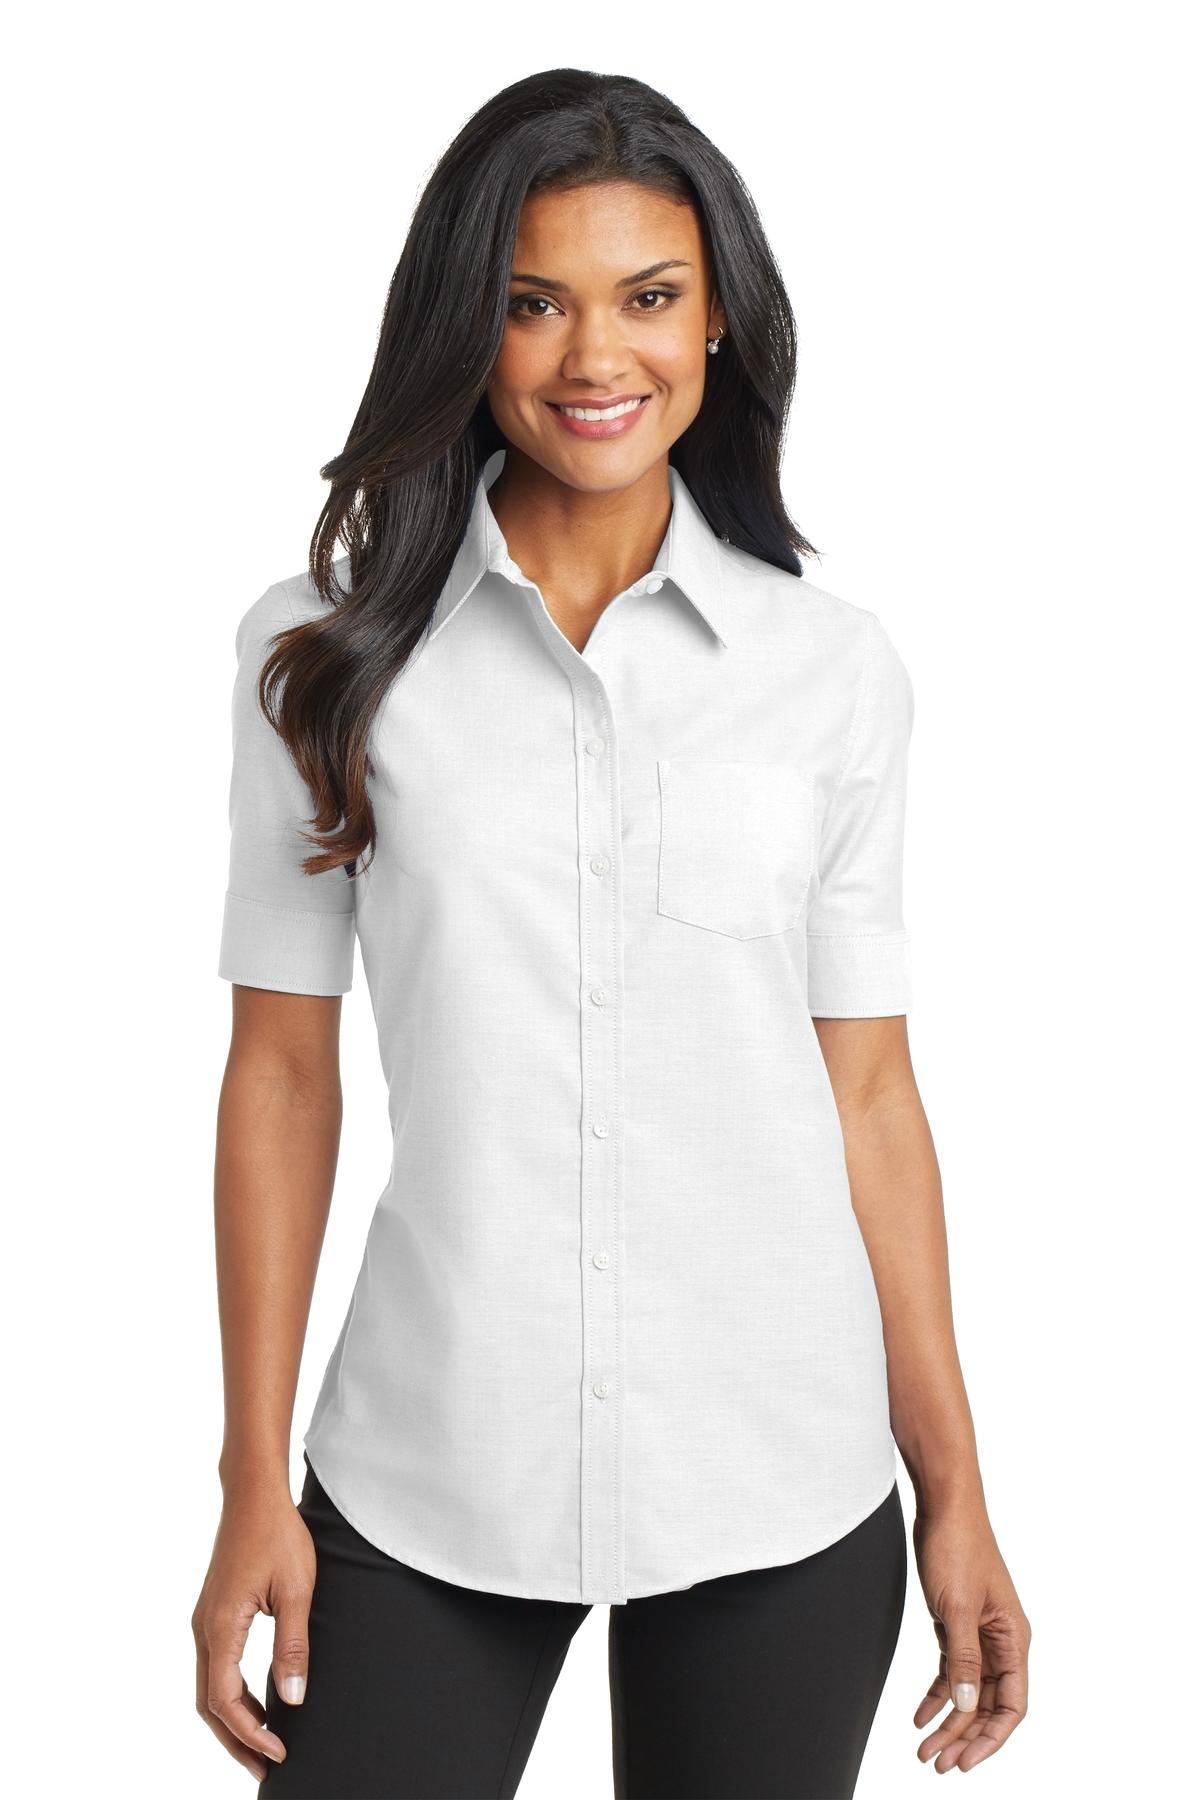 short sleeve white dress shirt womens